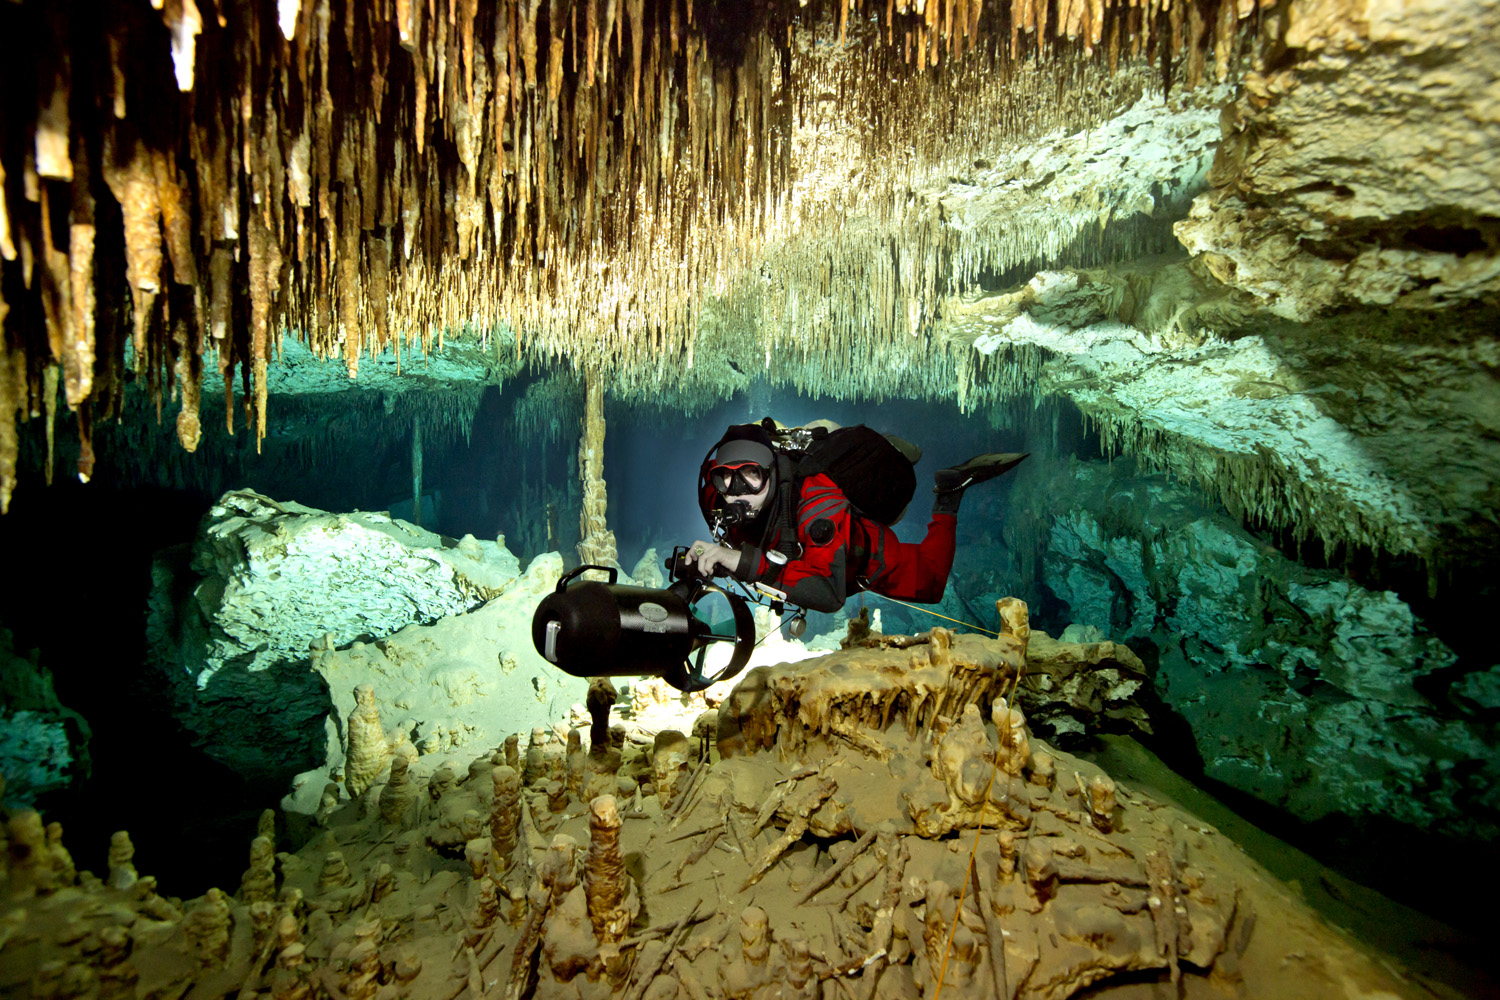 cave diver in Mexico, Yucatan